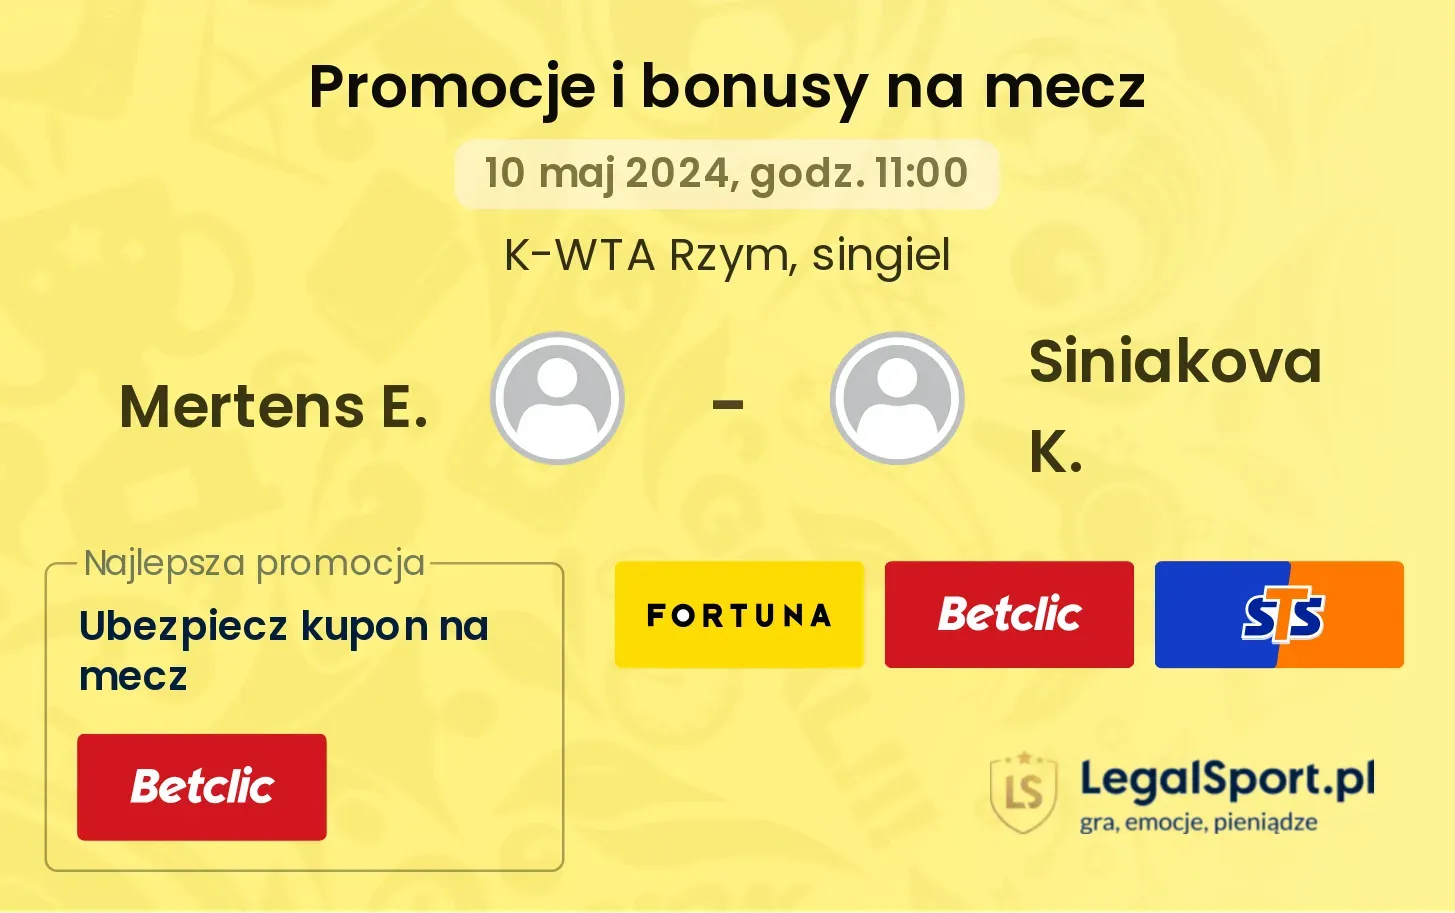 Mertens E. - Siniakova K. promocje bonusy na mecz